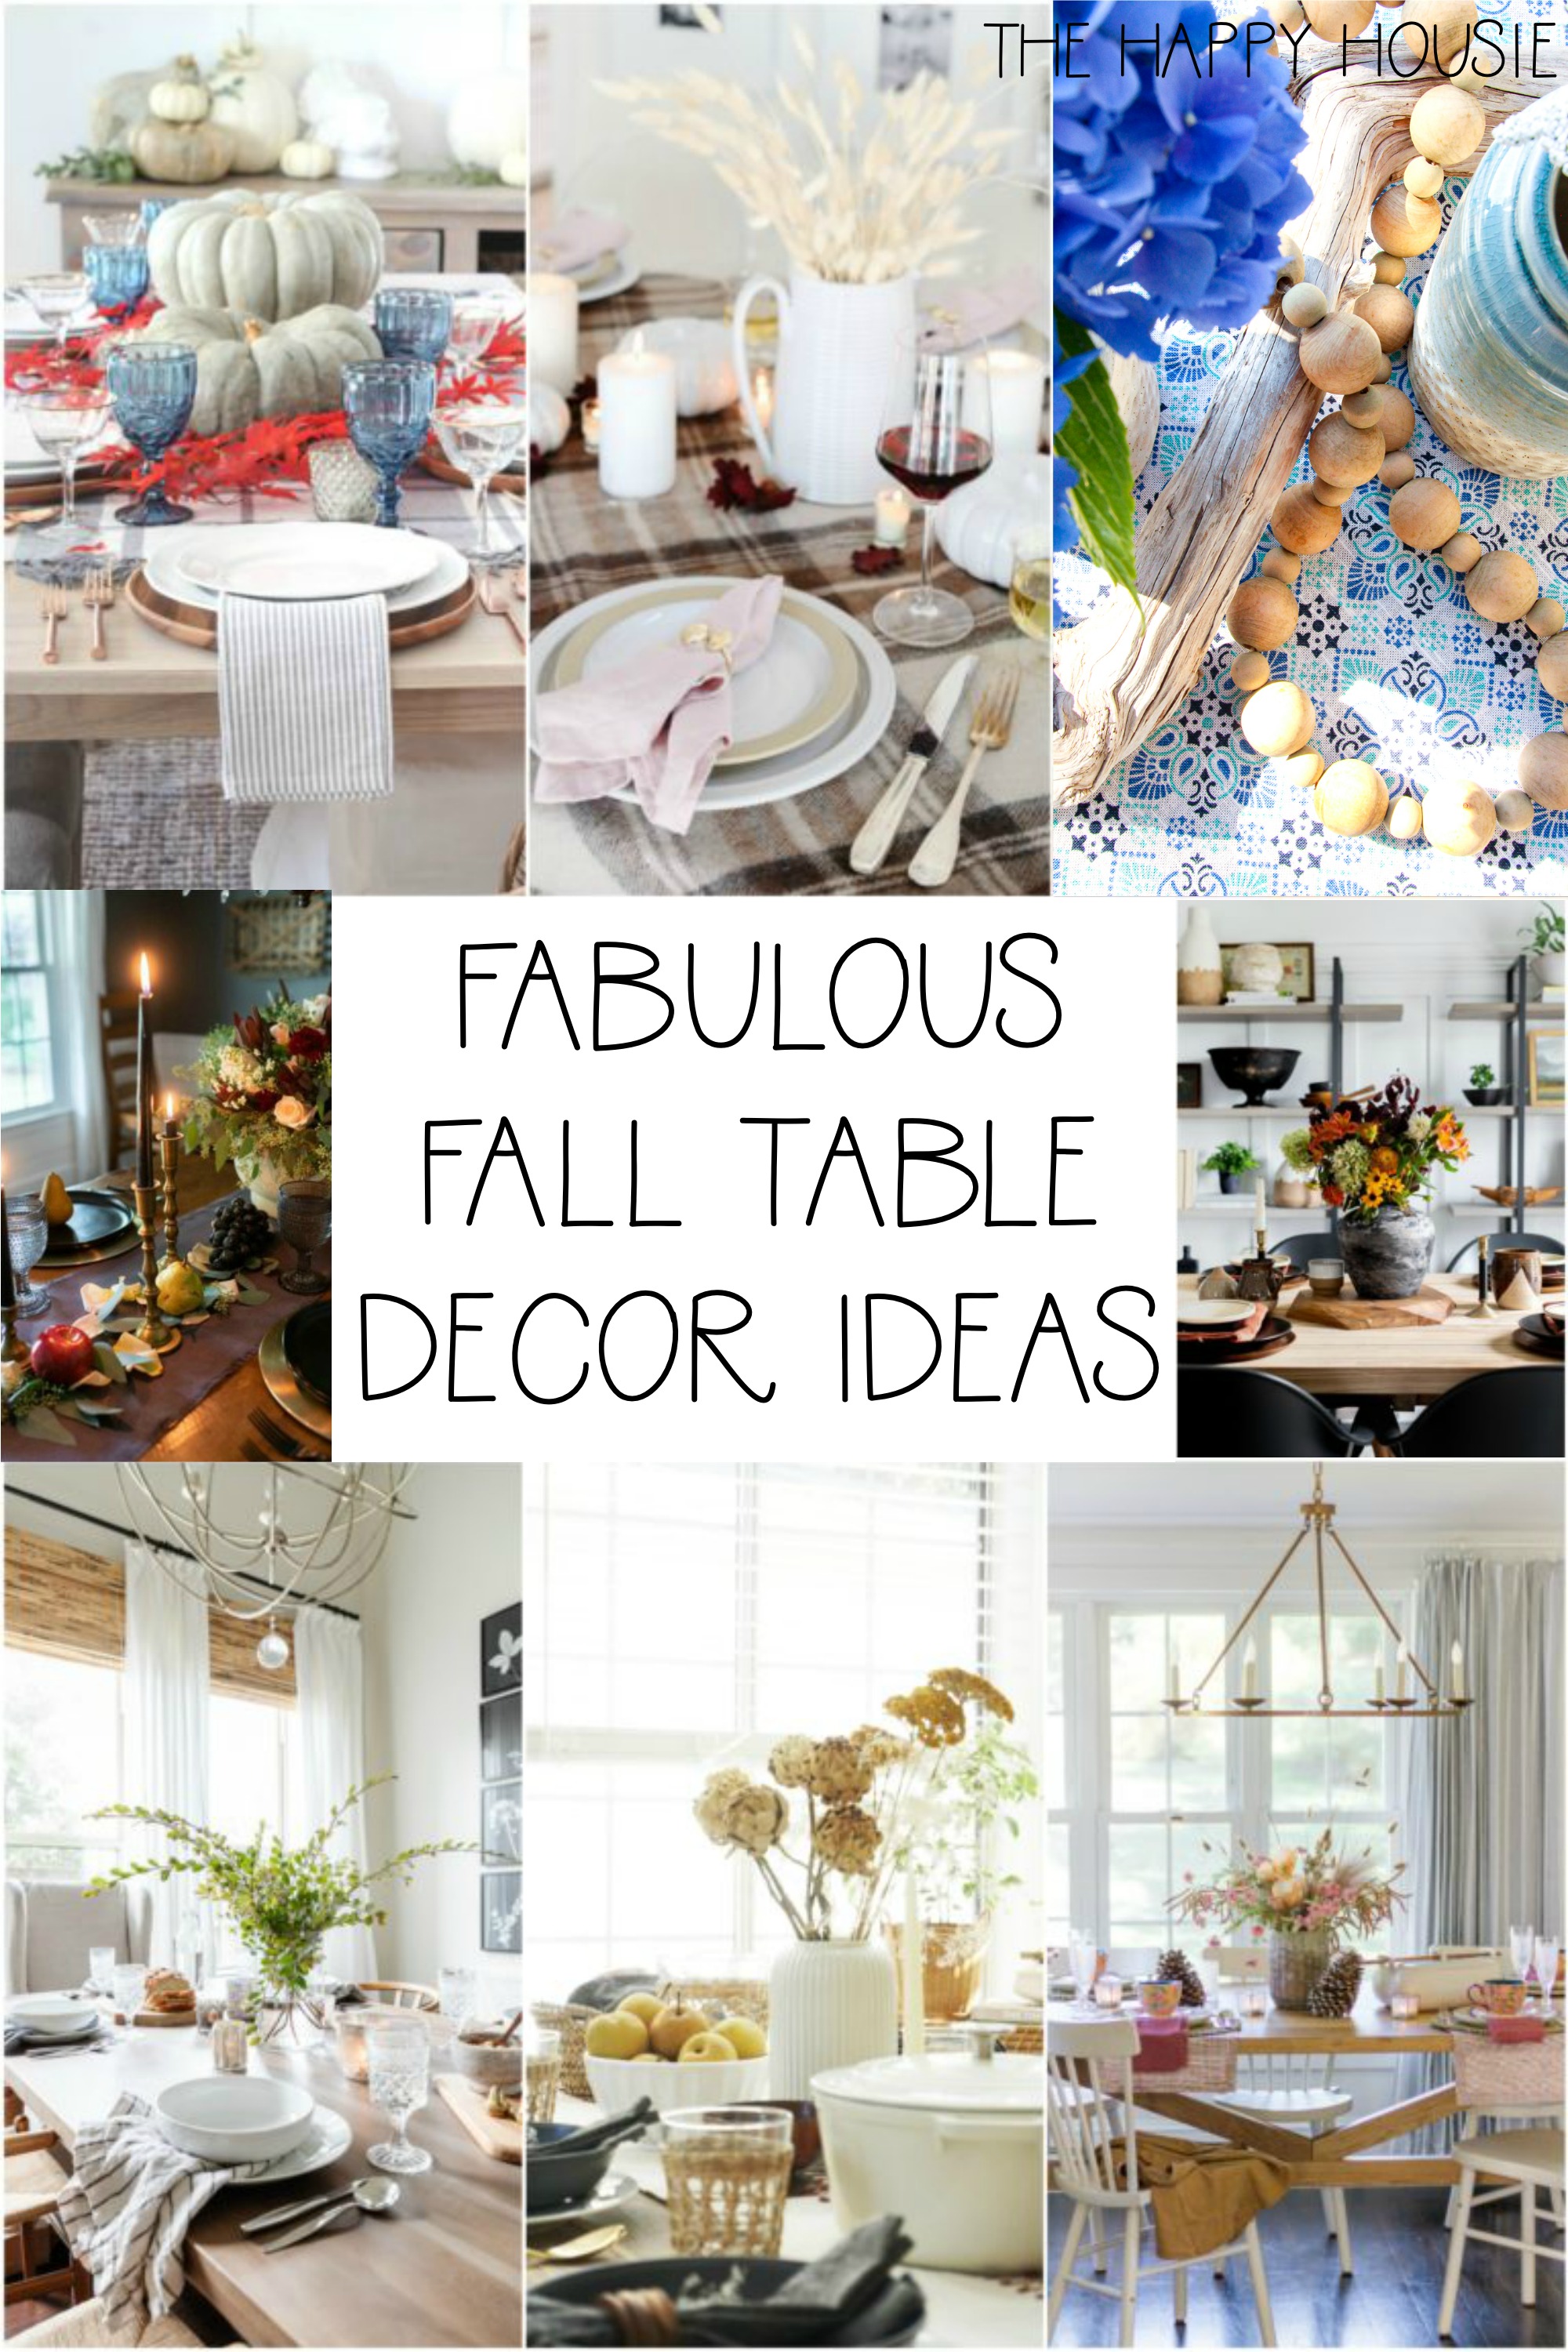 Fabulous Fall Table Decor Ideas poster.